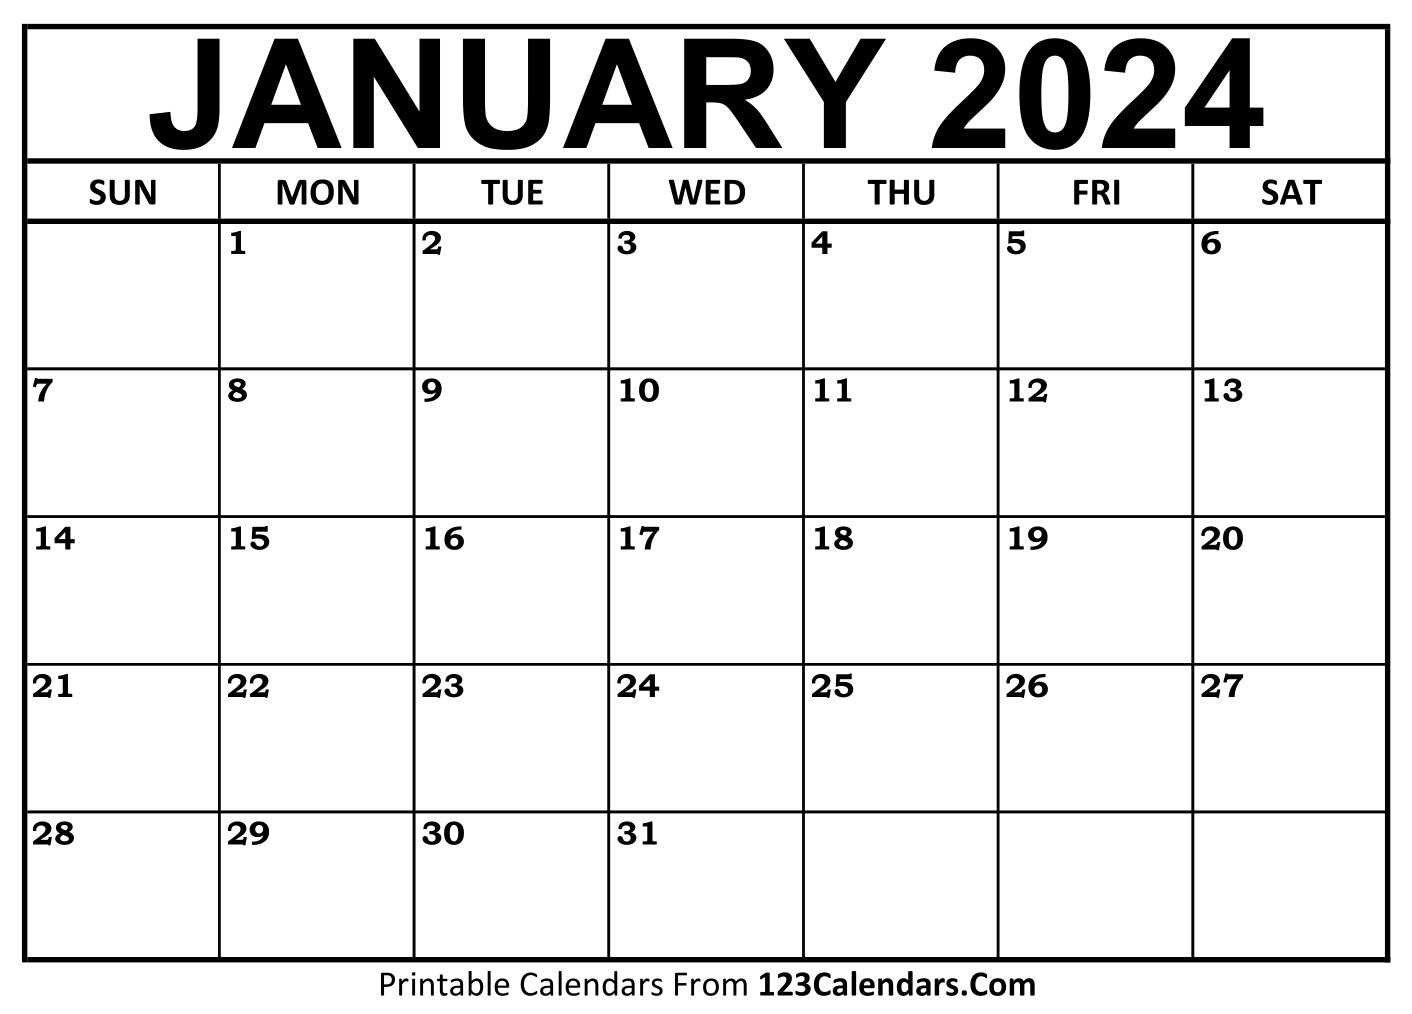 Printable January 2024 Calendar Templates - 123Calendars | Printable Calendar 2024 Jan